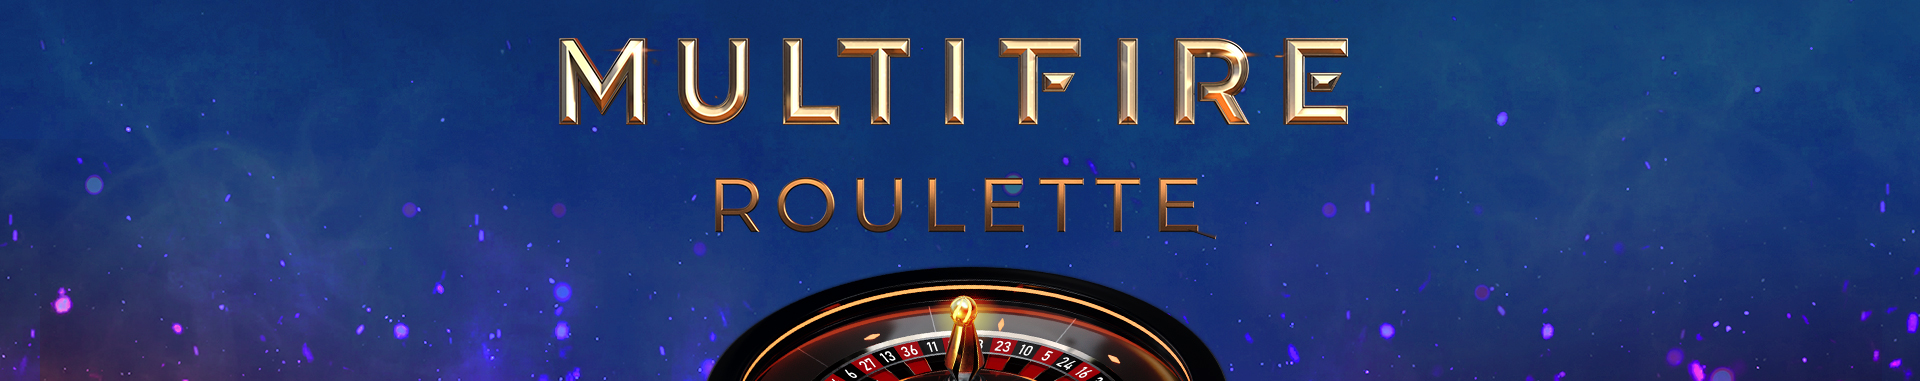 Ruleta Multifire Roulette